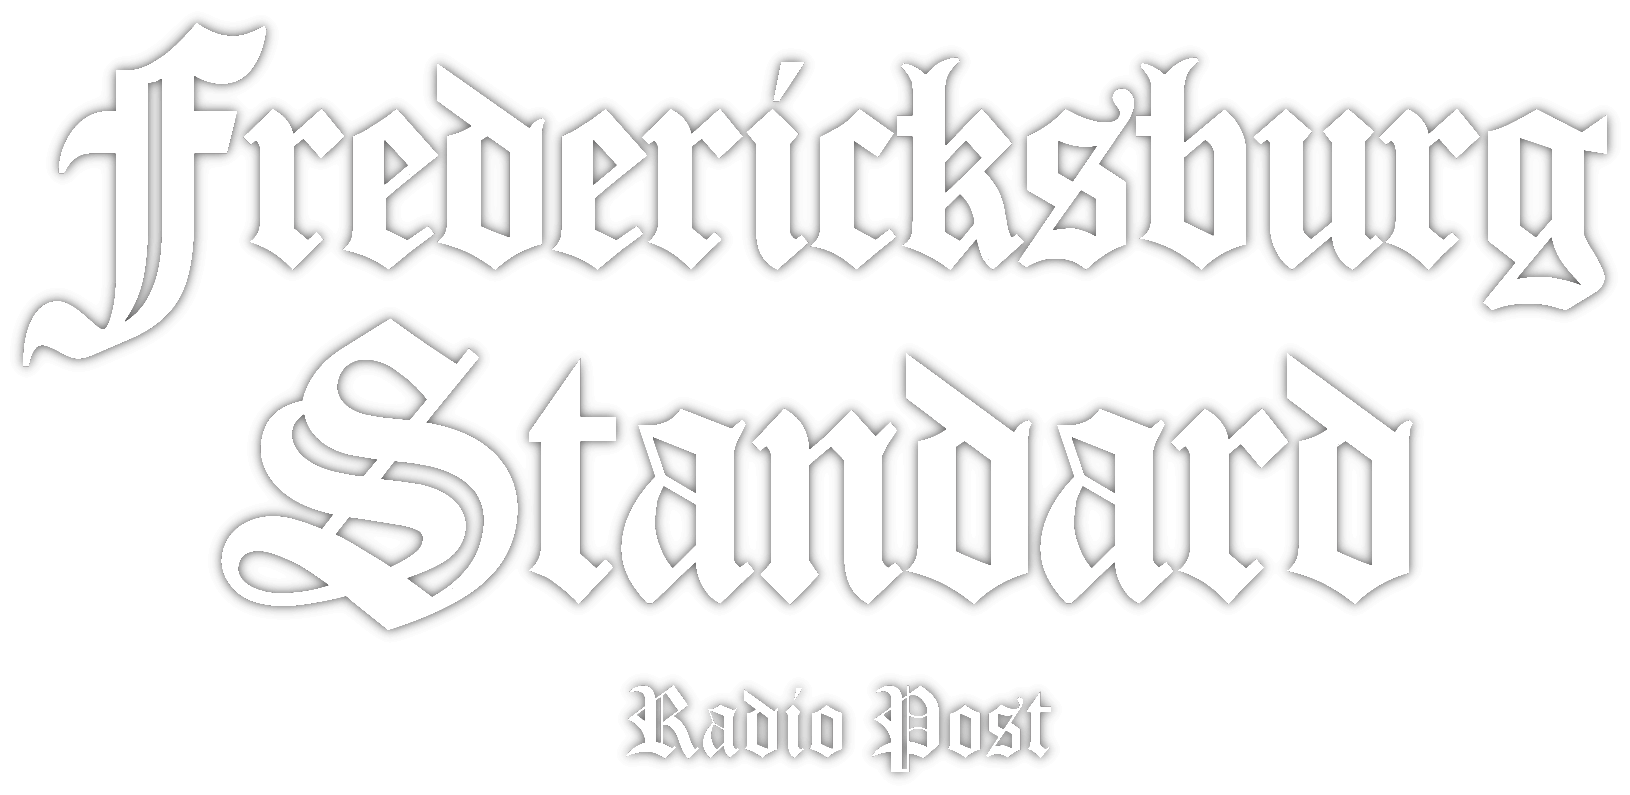 Fredericksburg Standard Radio-Post